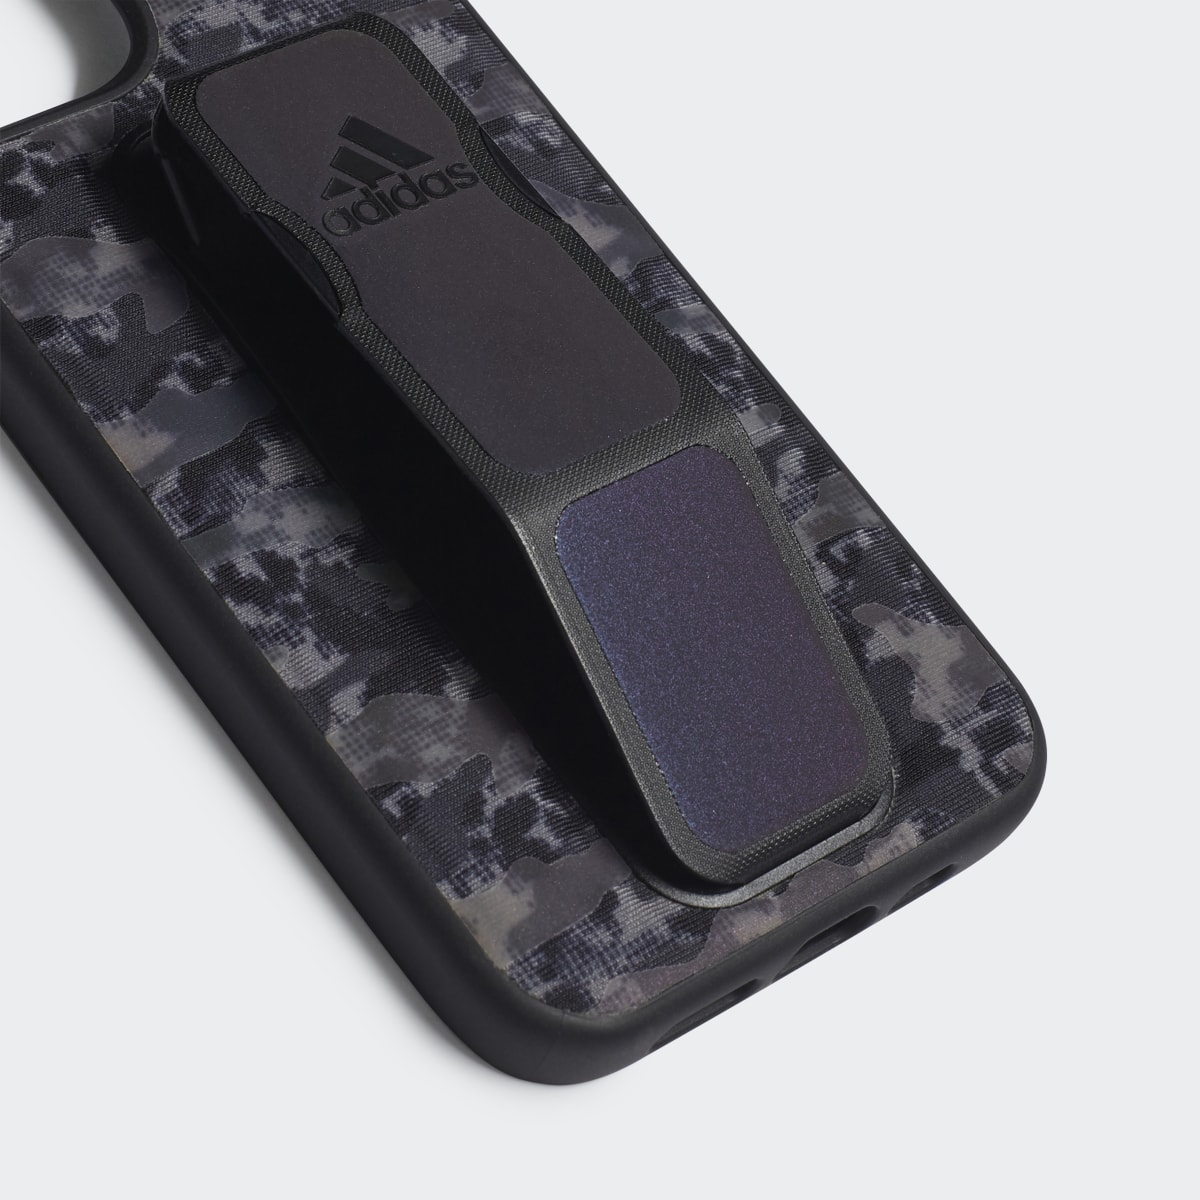 Adidas Grip Case iPhone 2020 6.1 Inch. 4